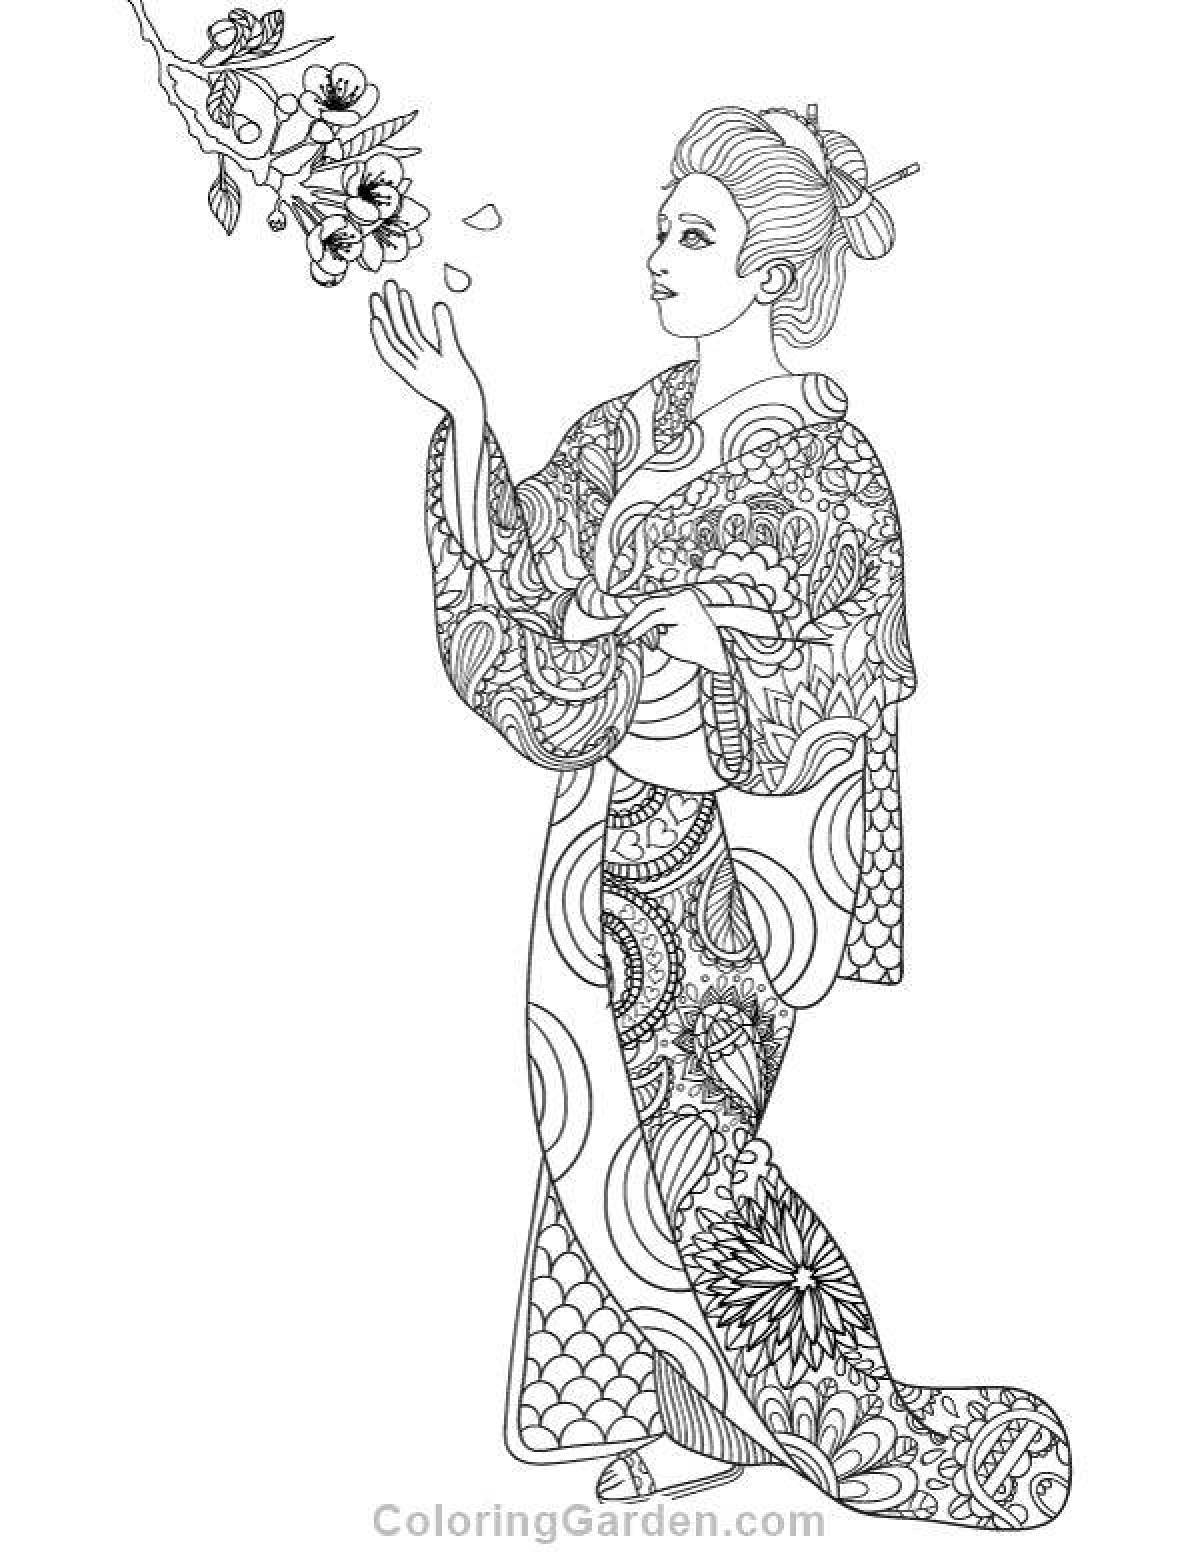 Great geisha coloring book